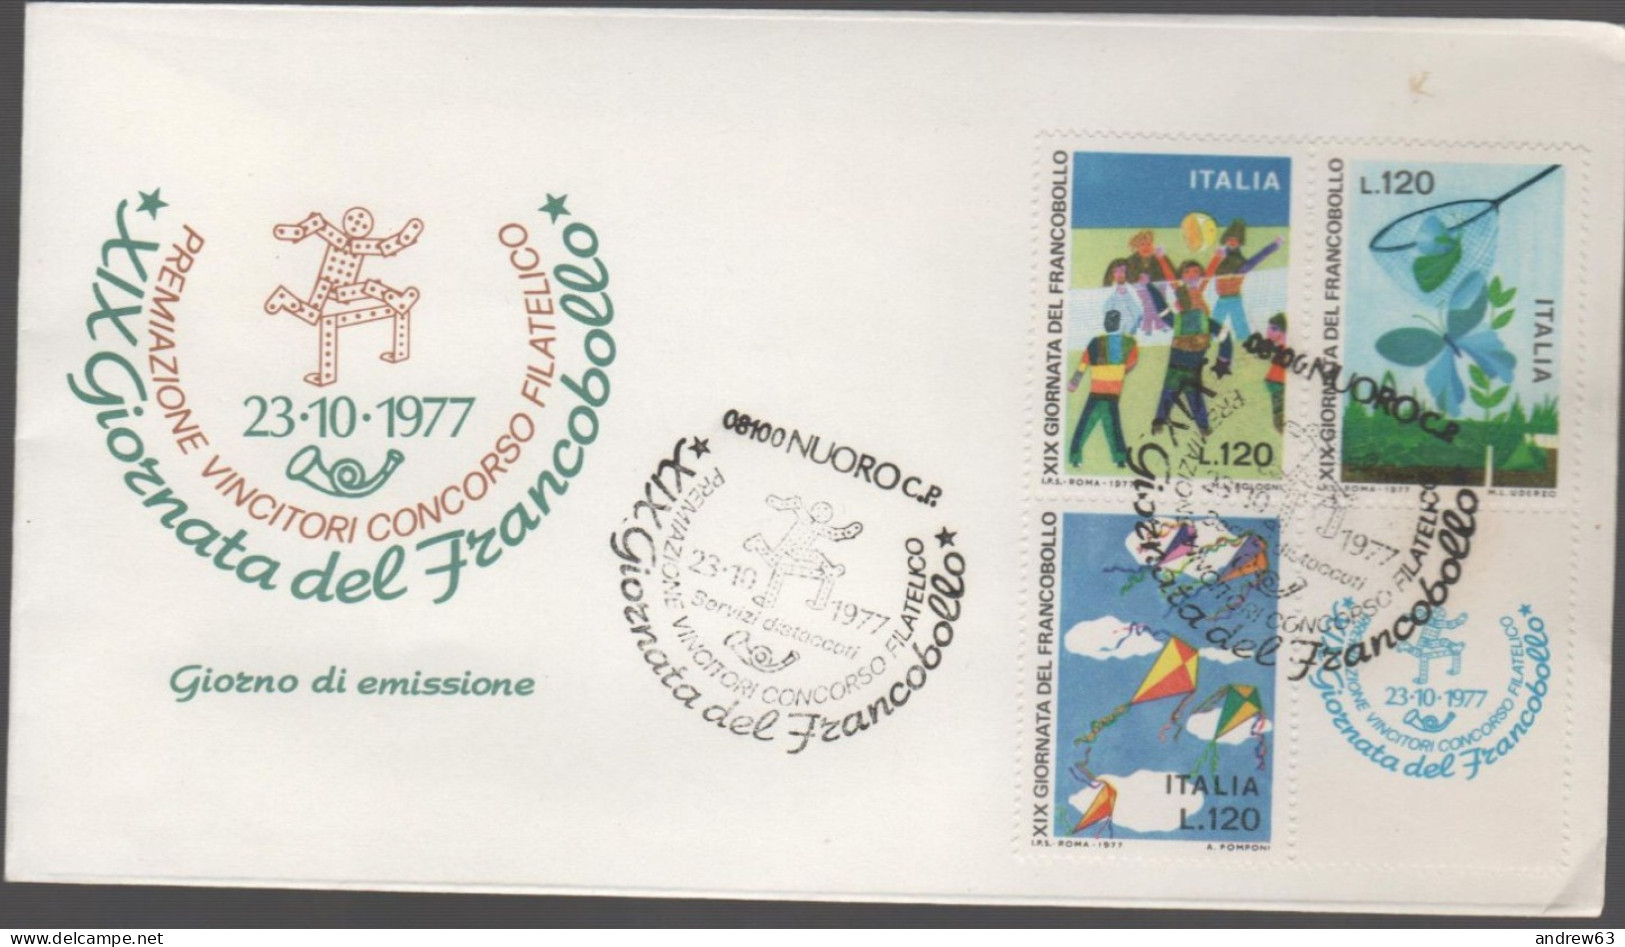 ITALIA - ITALIE - ITALY - 1977 - 19ª Giornata Del Francobollo - FDC Poste Italiane - FDC